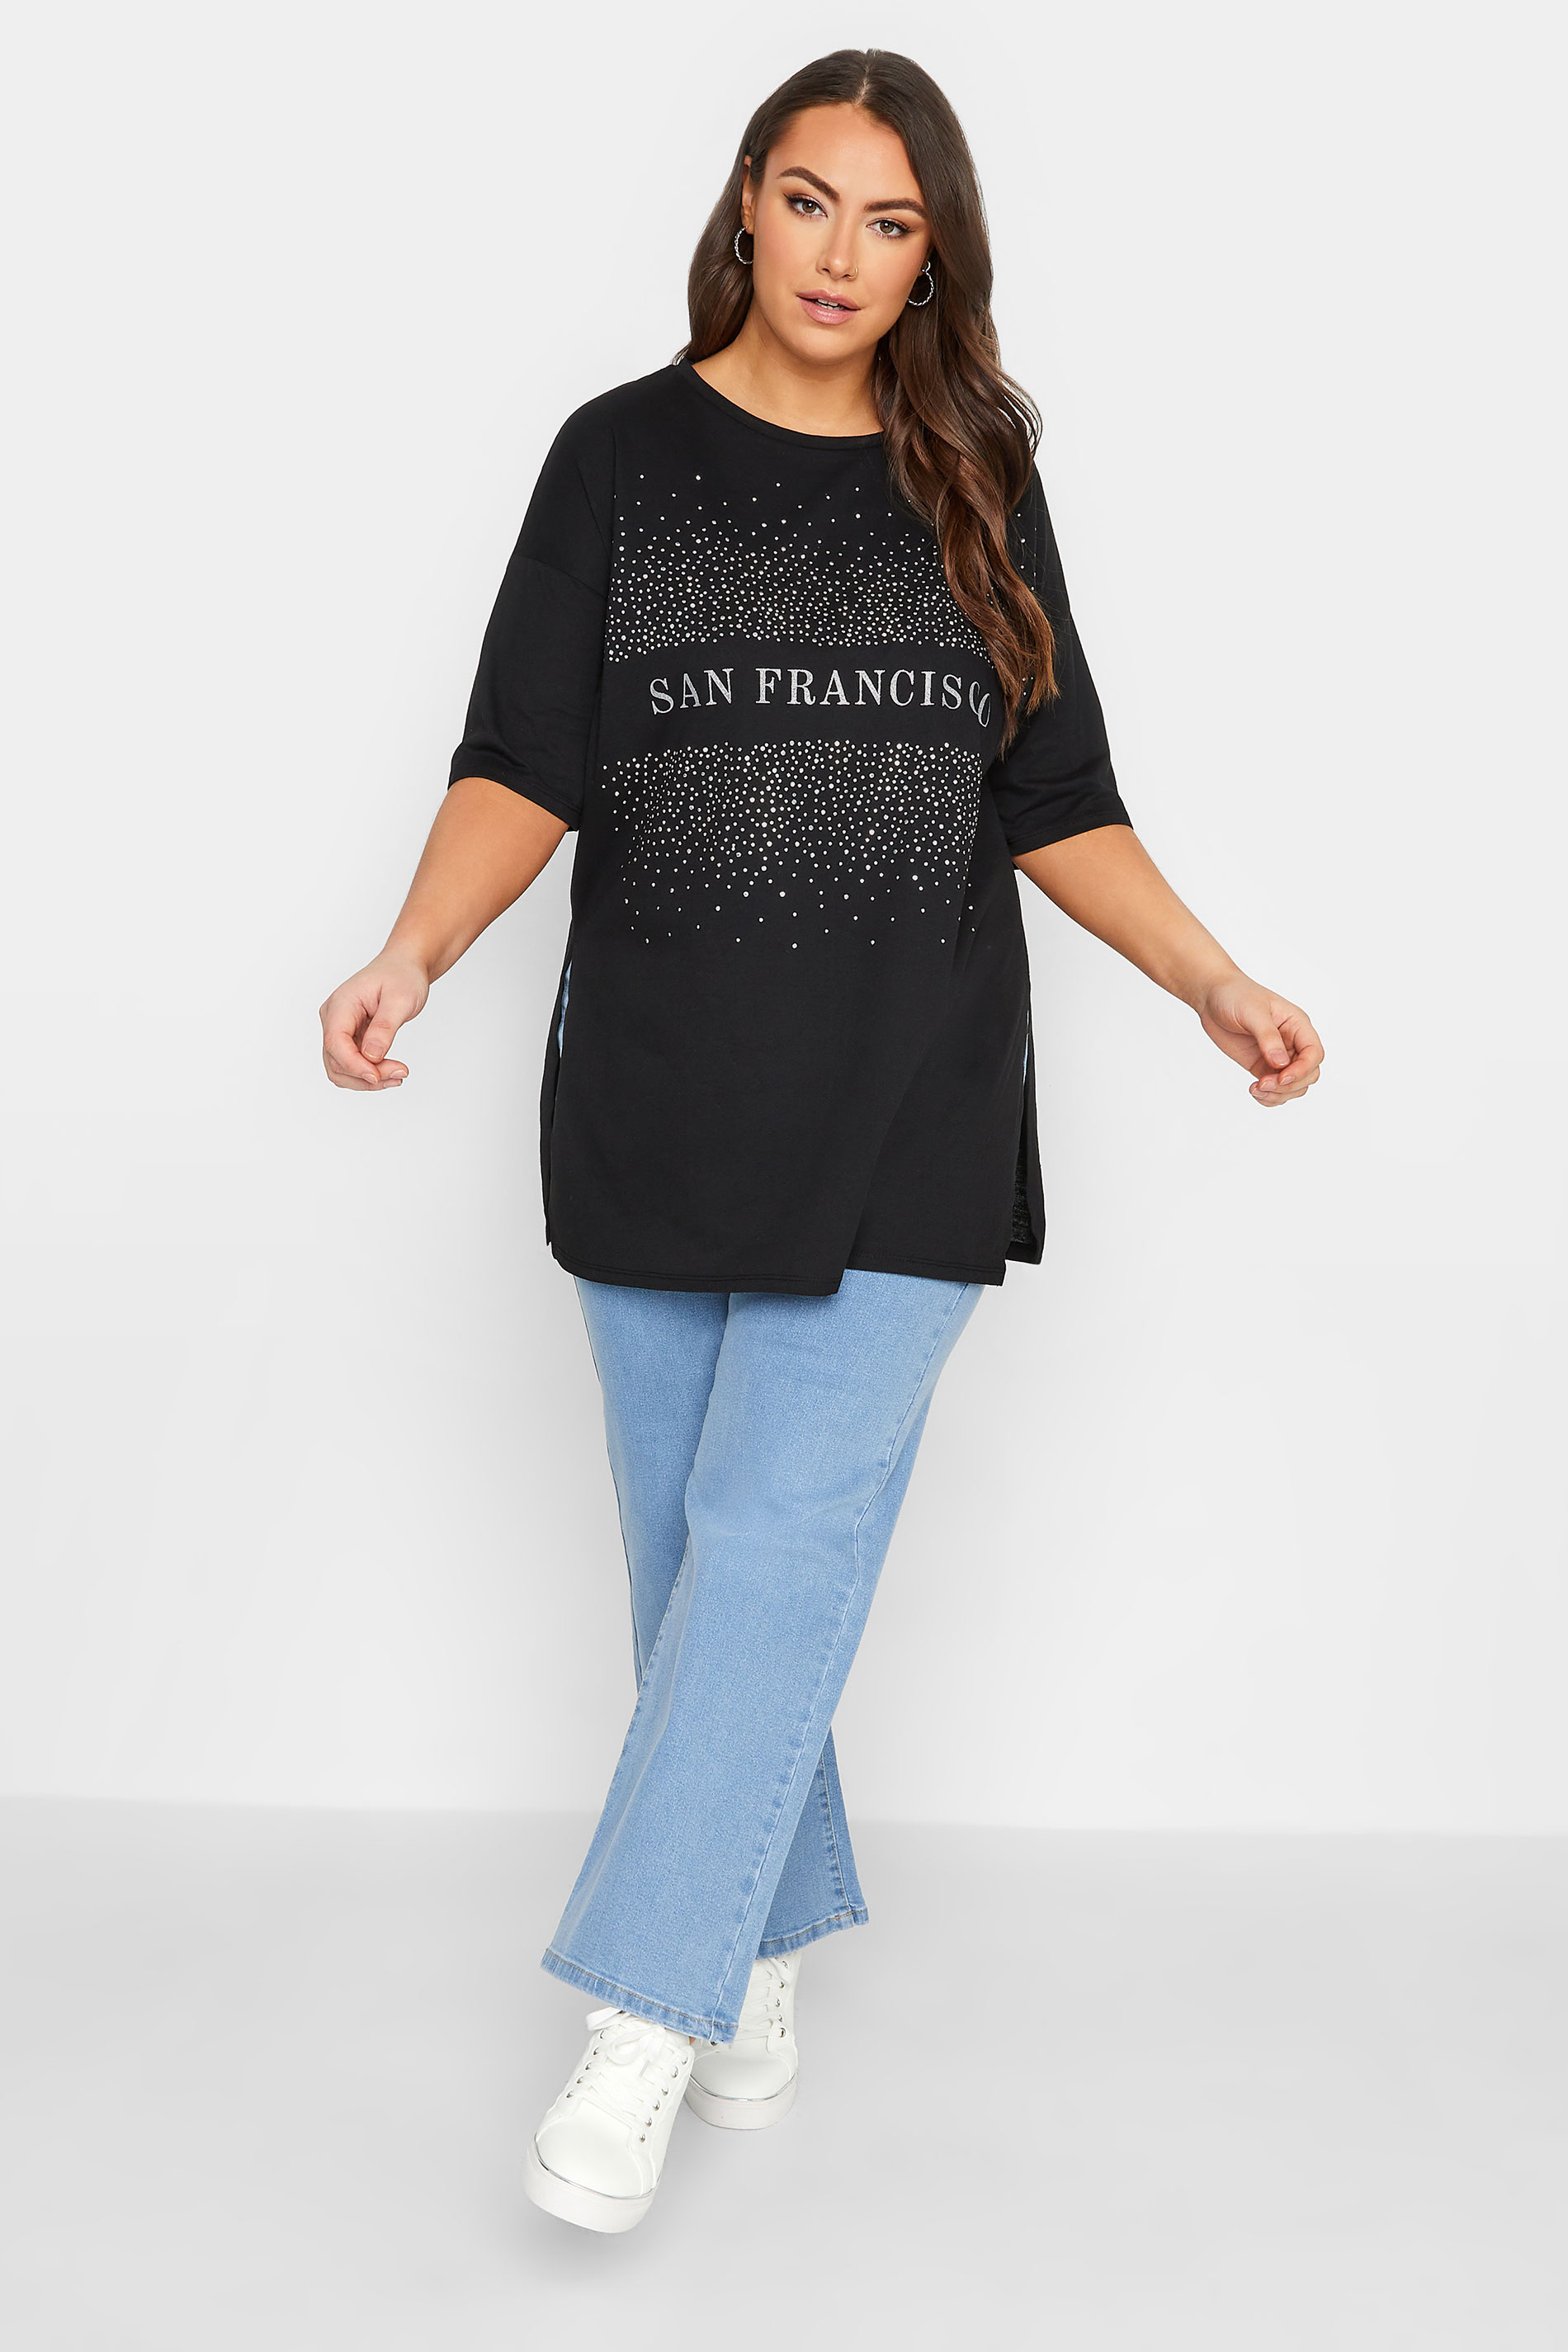 YOURS Plus Size Curve Black 'San Francisco' Slogan Sequin T-Shirt | Yours Clothing 2